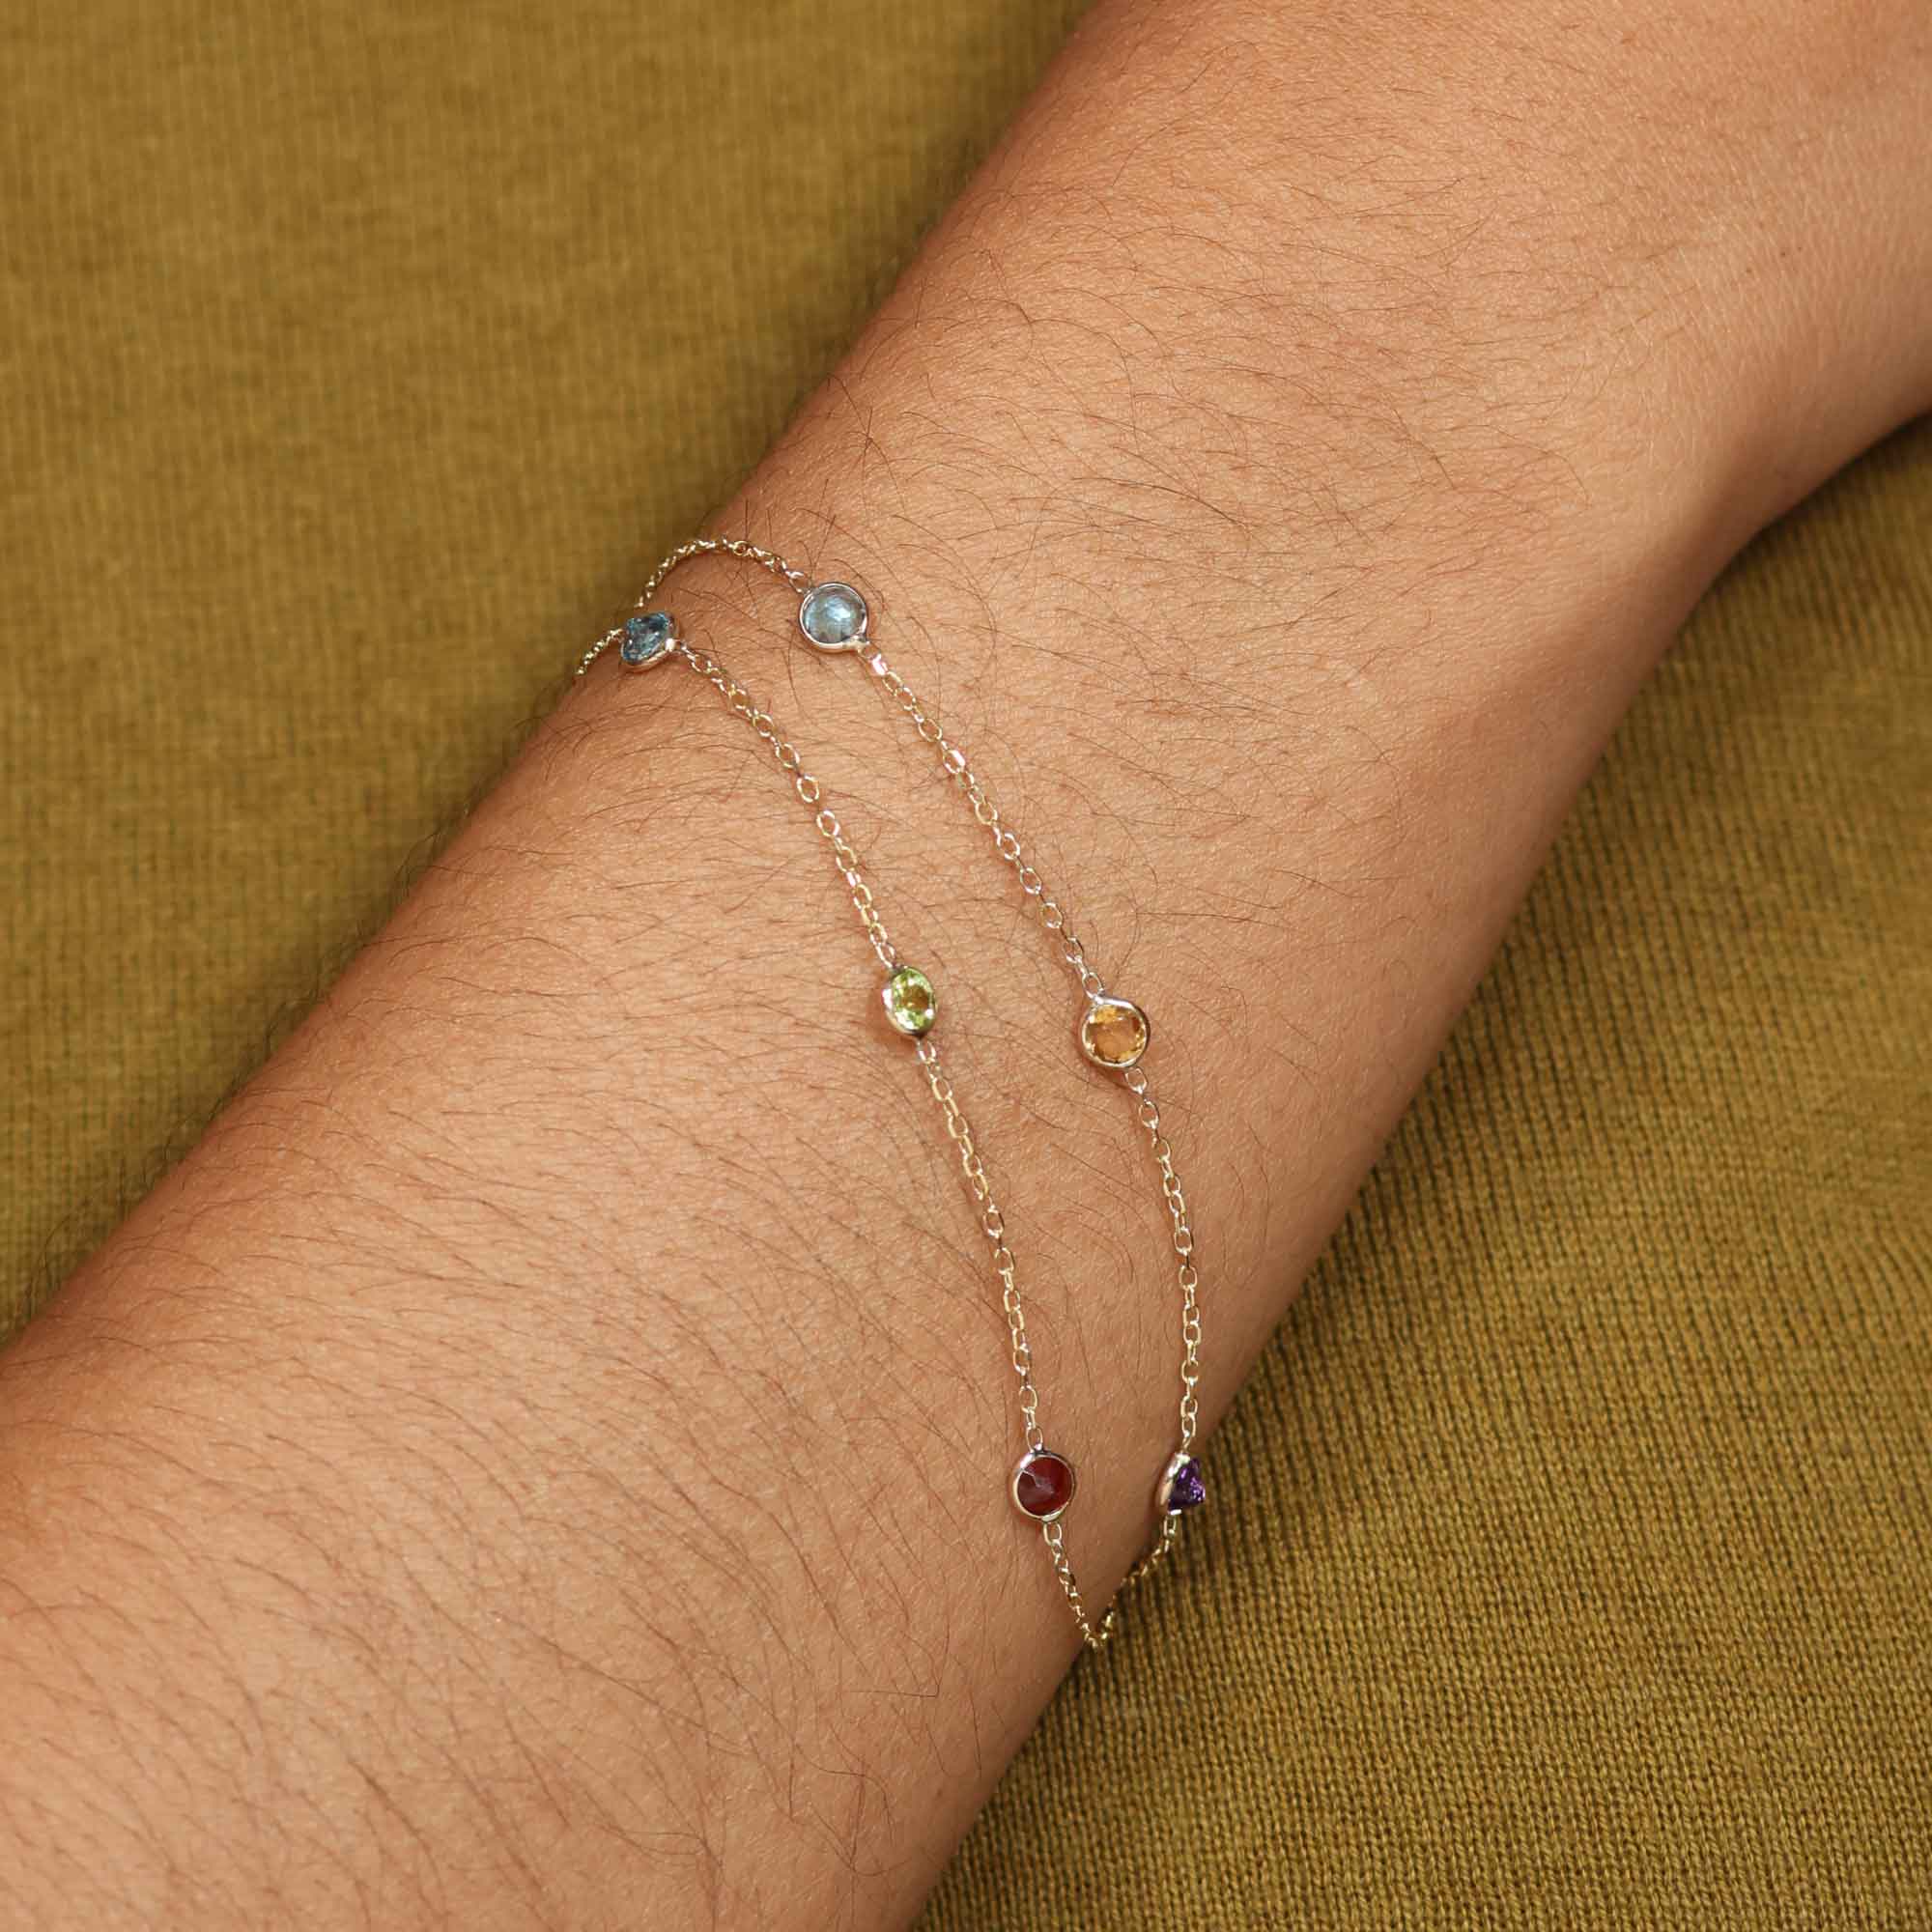 The Benefits Of Wearing Gemstone Bracelets | Village Rock Shop